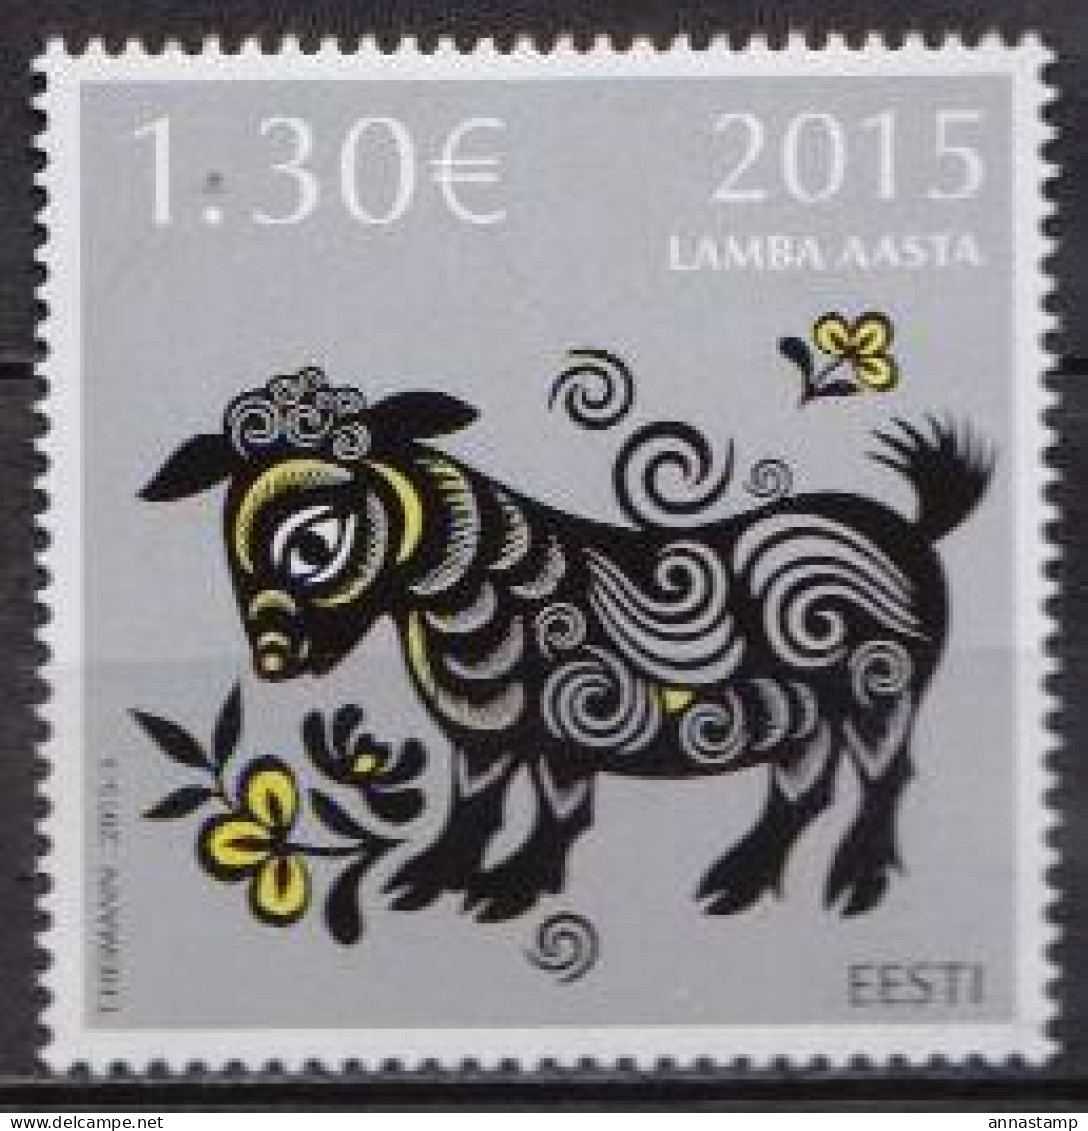 Estonia MNH Stamp - Chinees Nieuwjaar